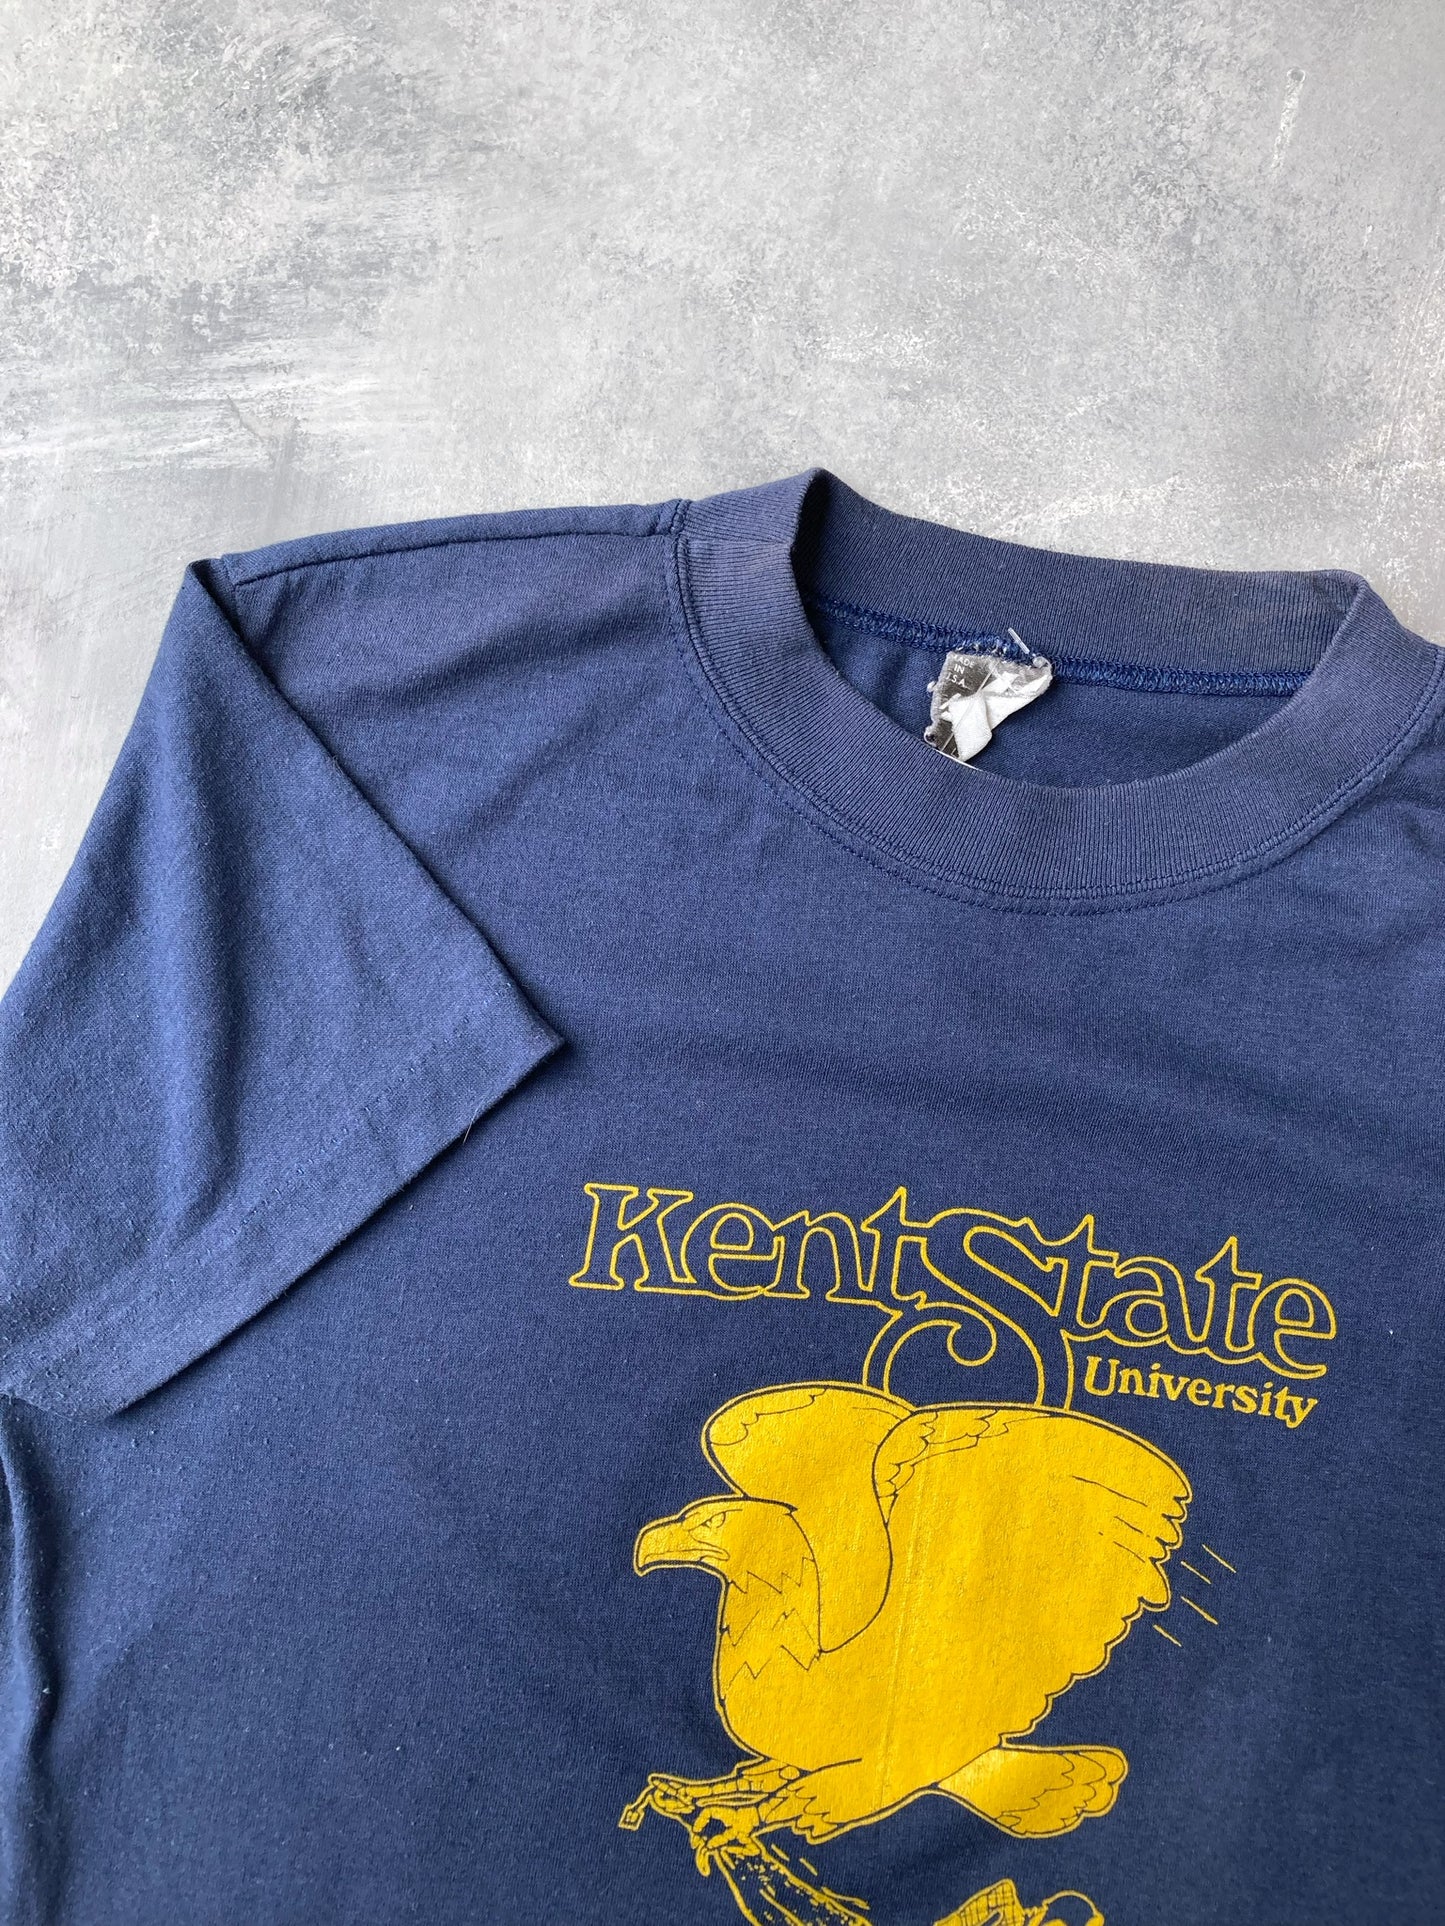 Kent State University '85 T-Shirt - Medium